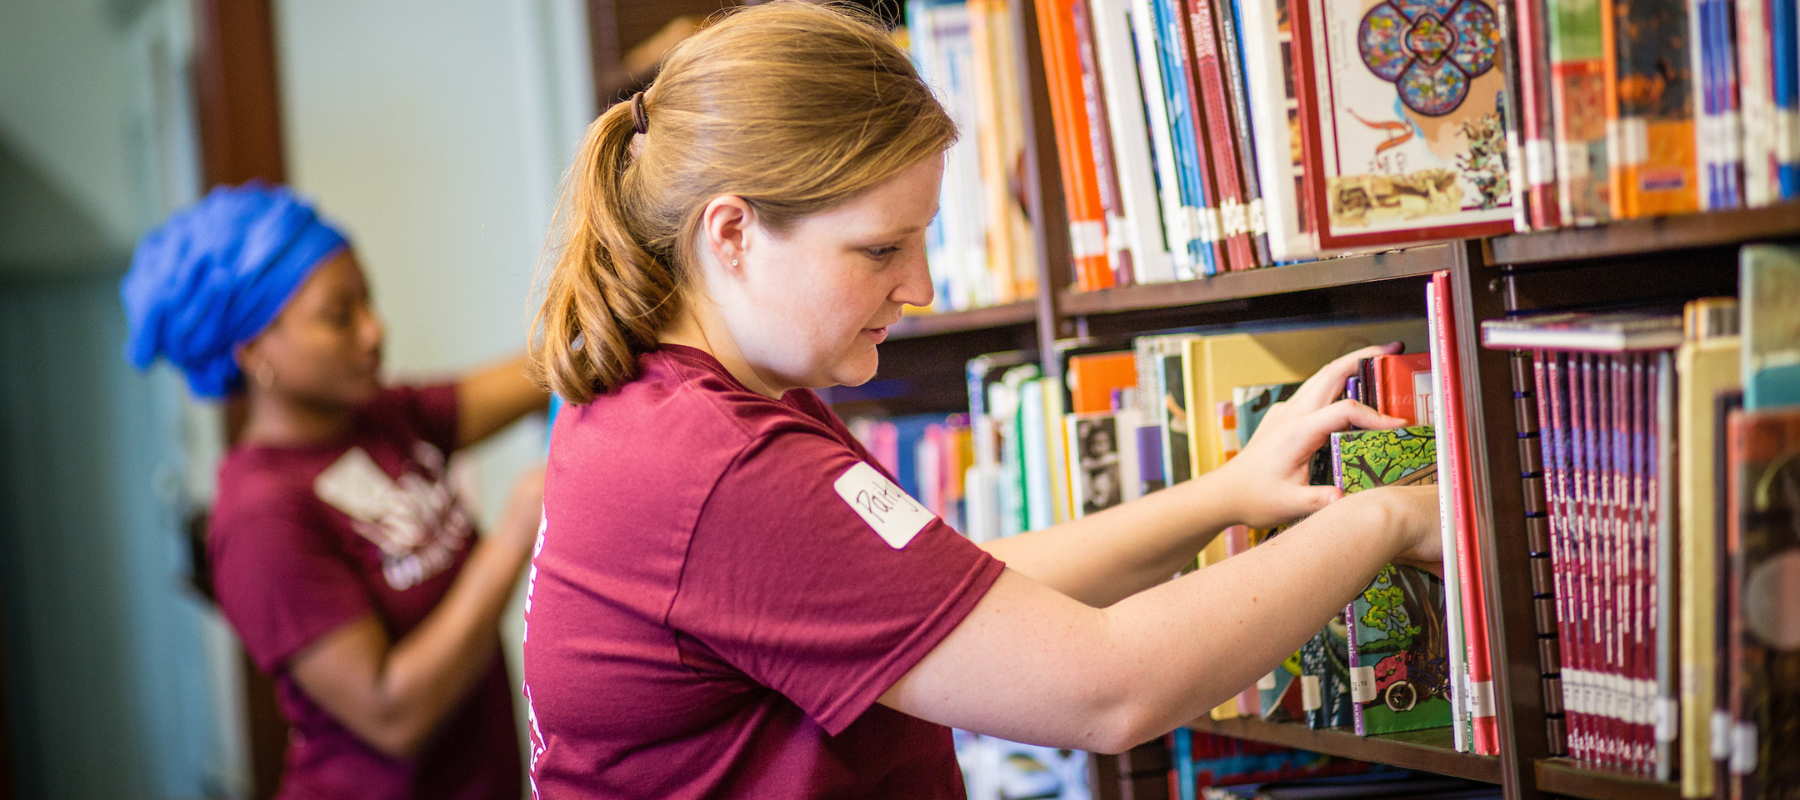 student teacher volunteering in a school library organizing books. 